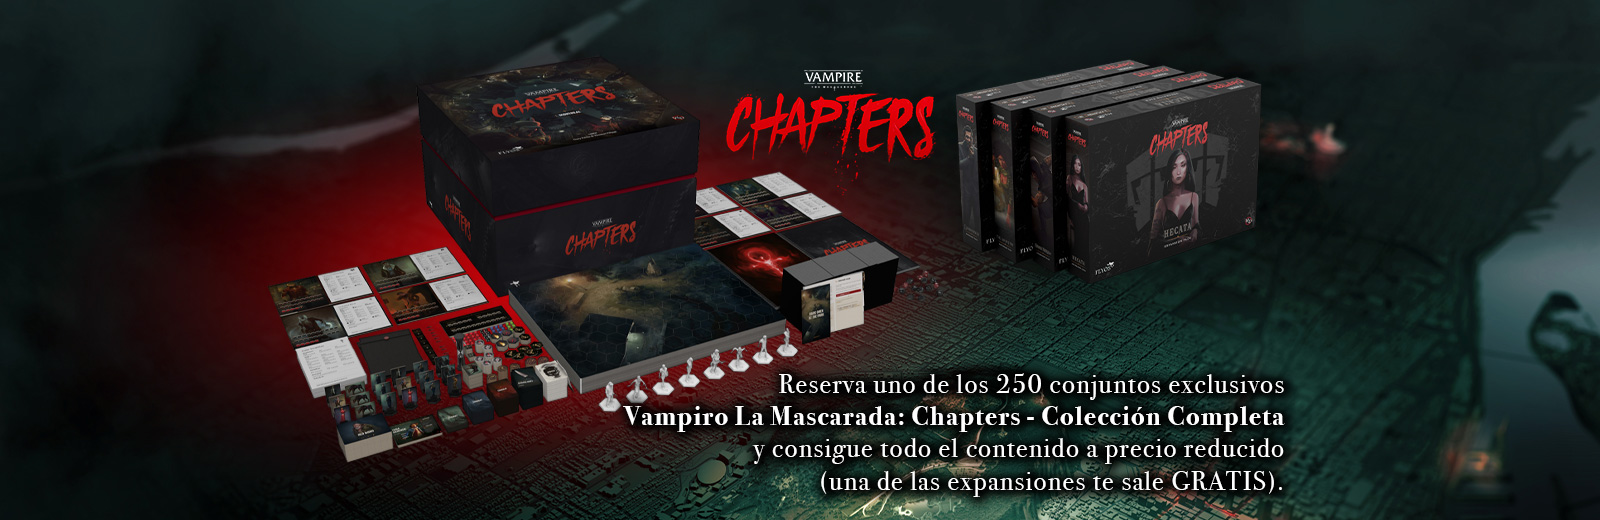 WEB-Vampire-Chapters.jpg